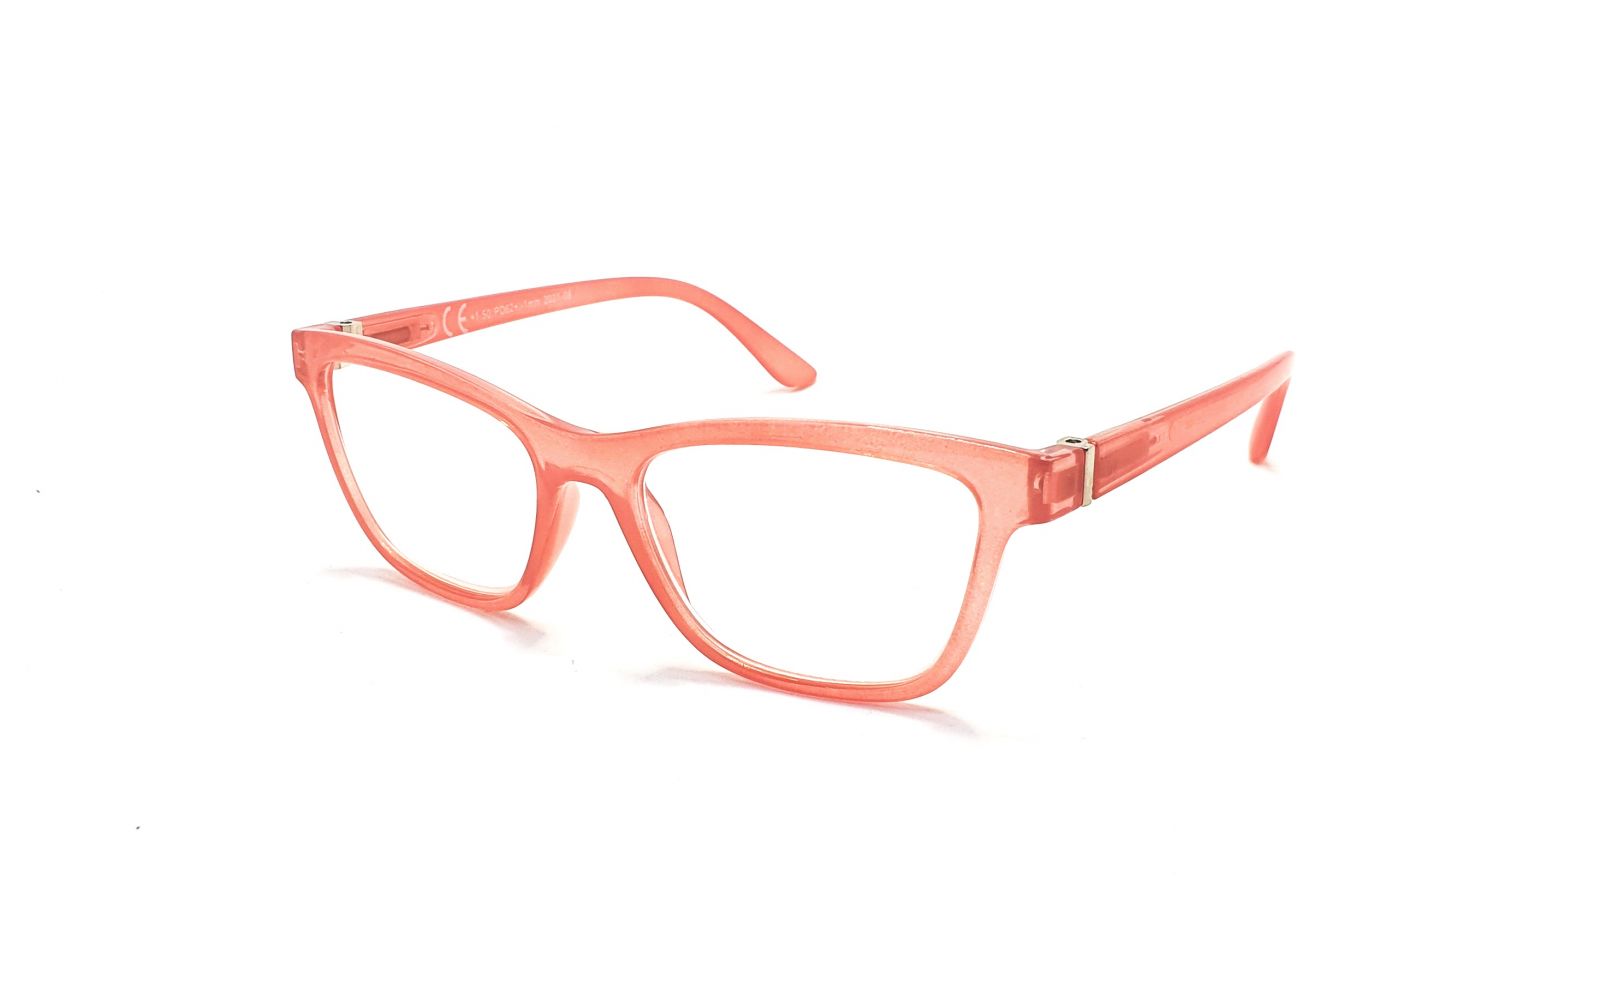 Dioptrické brýle R6225 / +2,00 flex pink